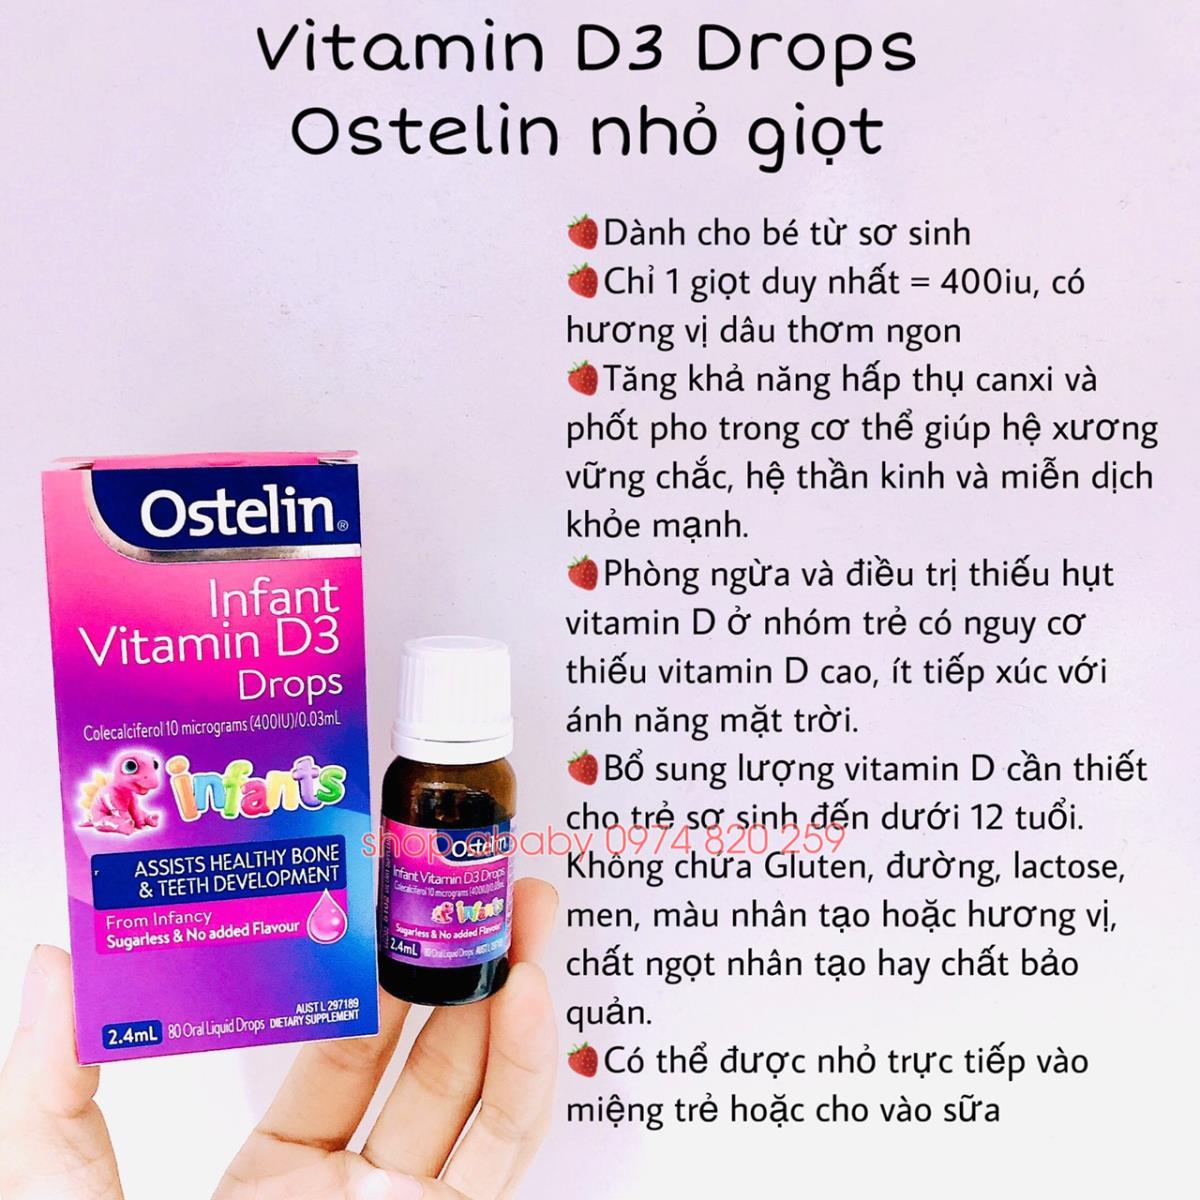 Vitamin D3 Drops Ostelin nhỏ giọt 0m+ | Siro,kẹo bổ sung Vitamin